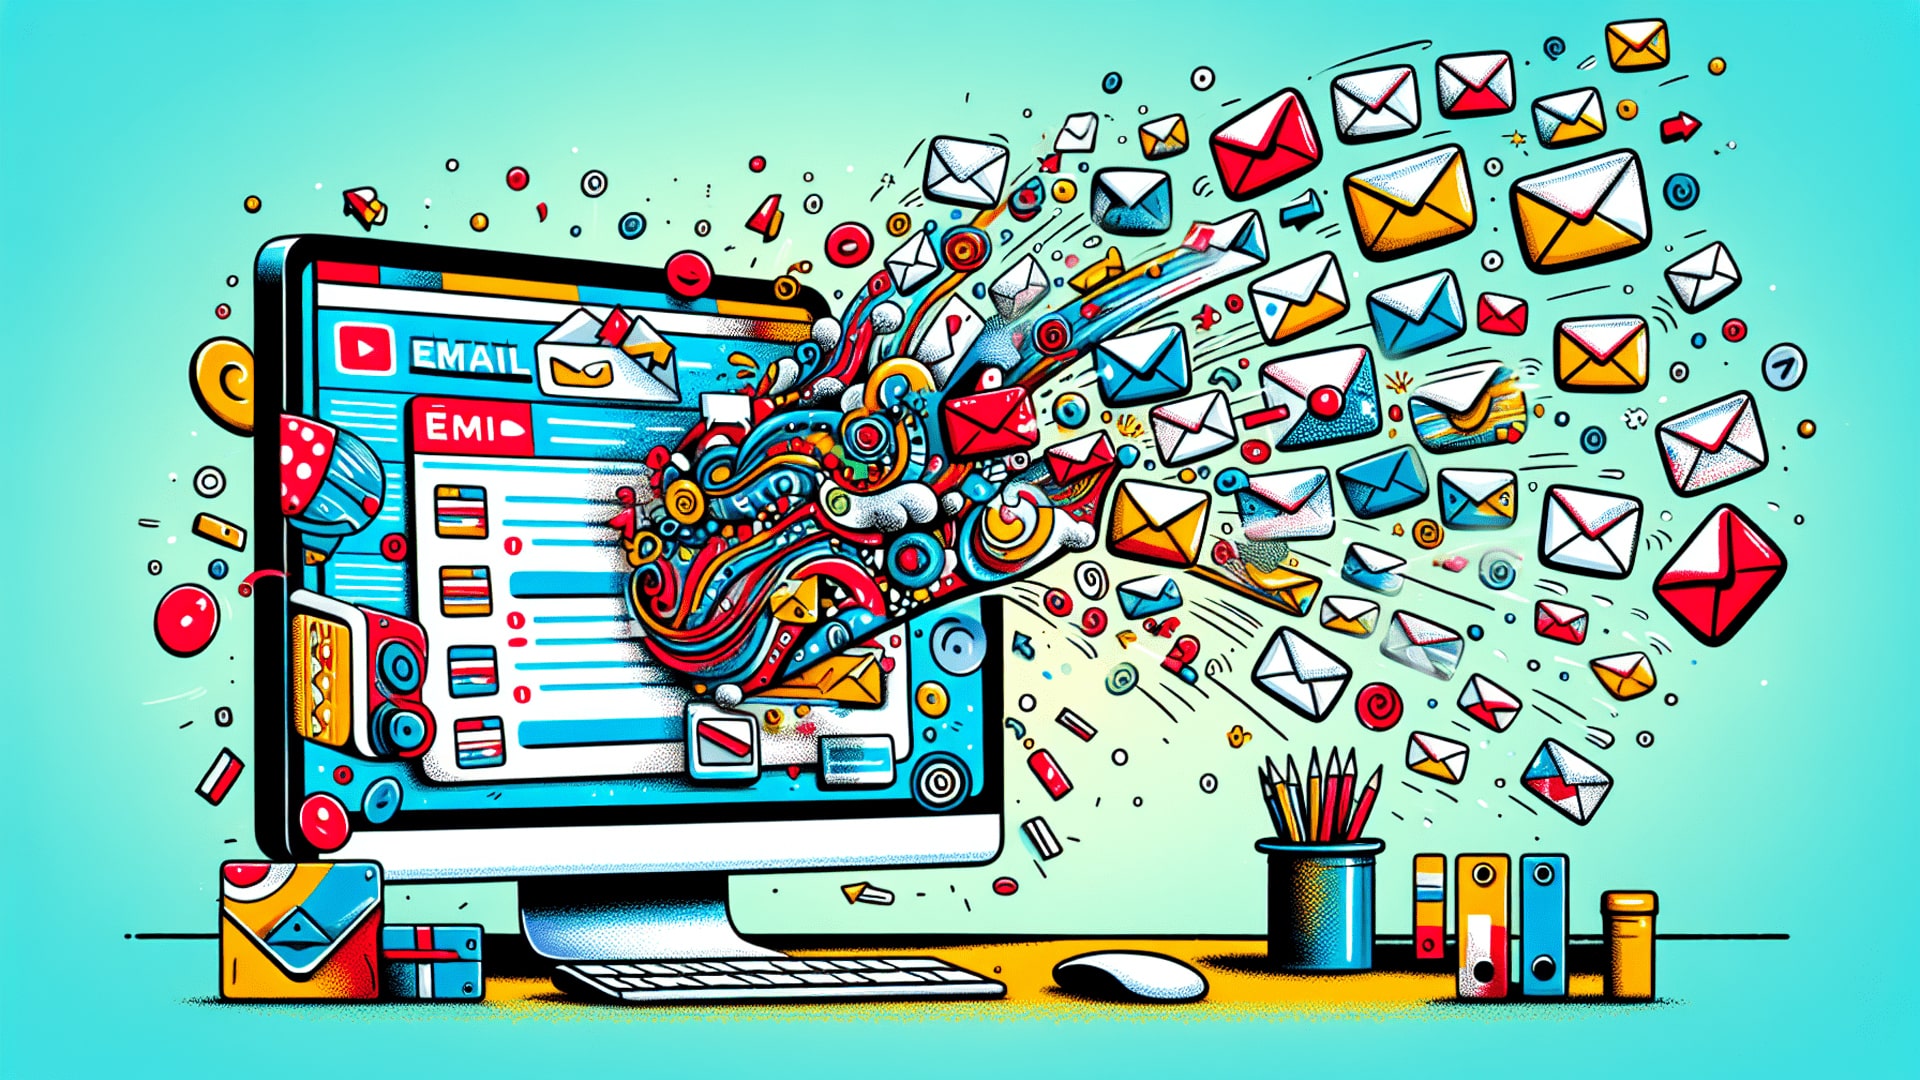 Cartoon illustration of email marketing